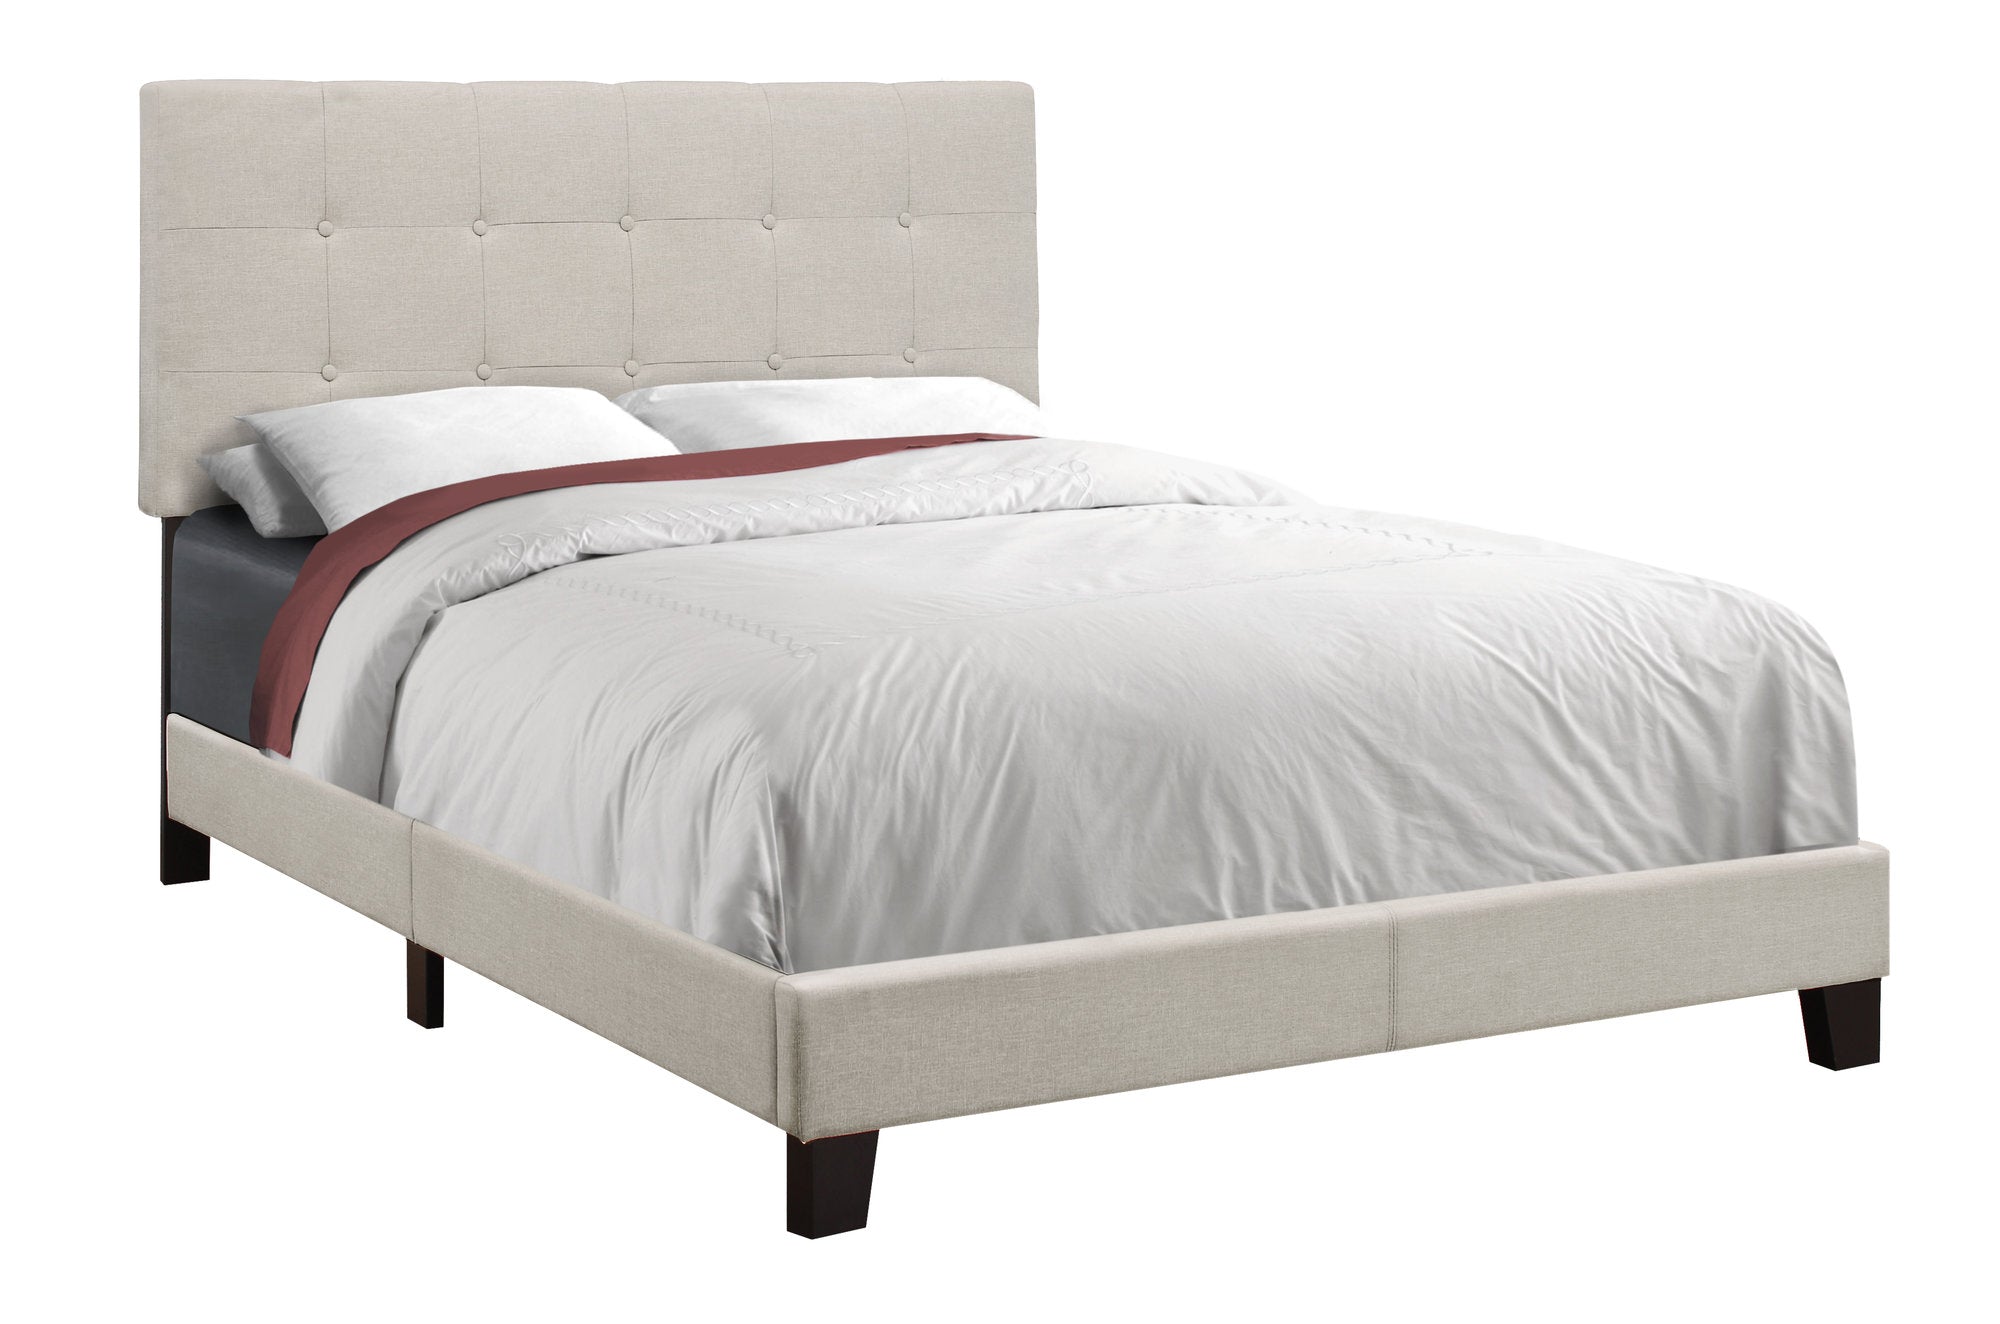 Full Size Beige Linen Bed